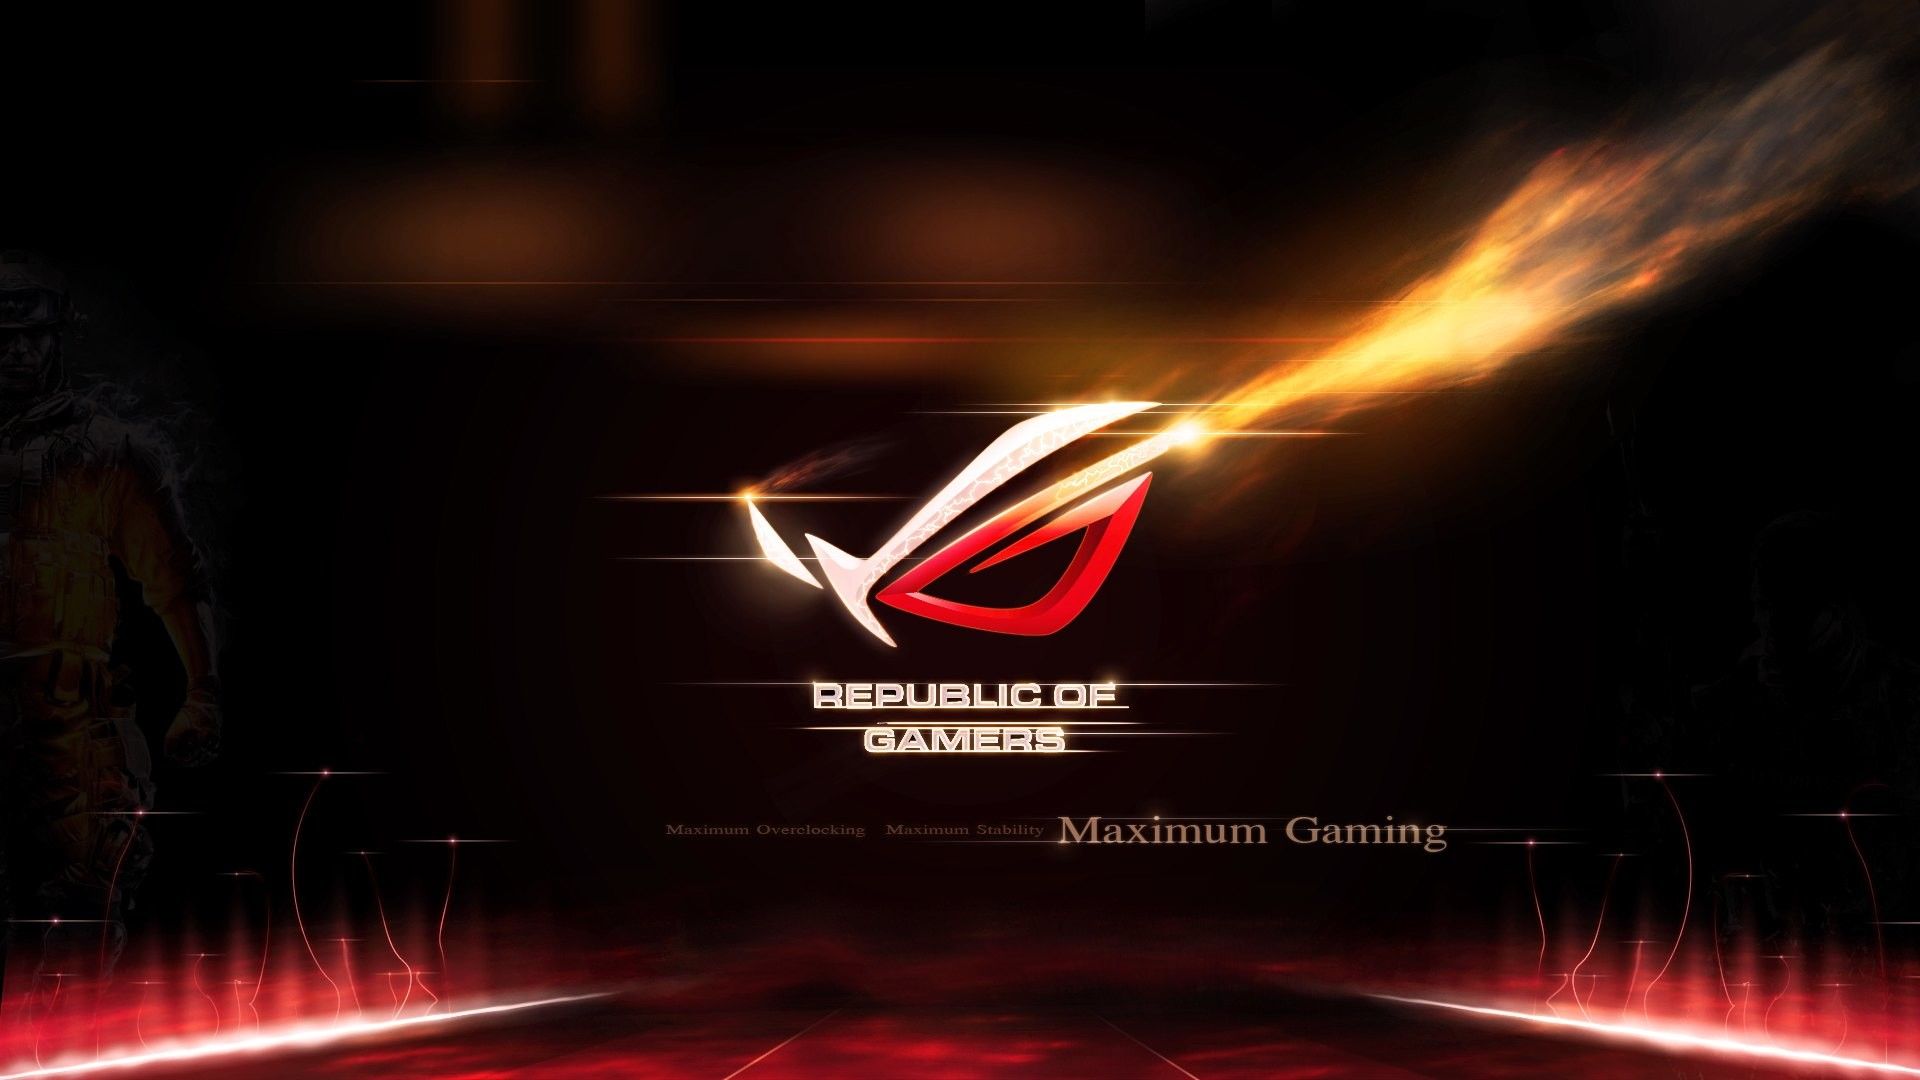 Download Asus Rog 4k Gaming Logo With Red Lightning Wallpaper  Wallpapers com